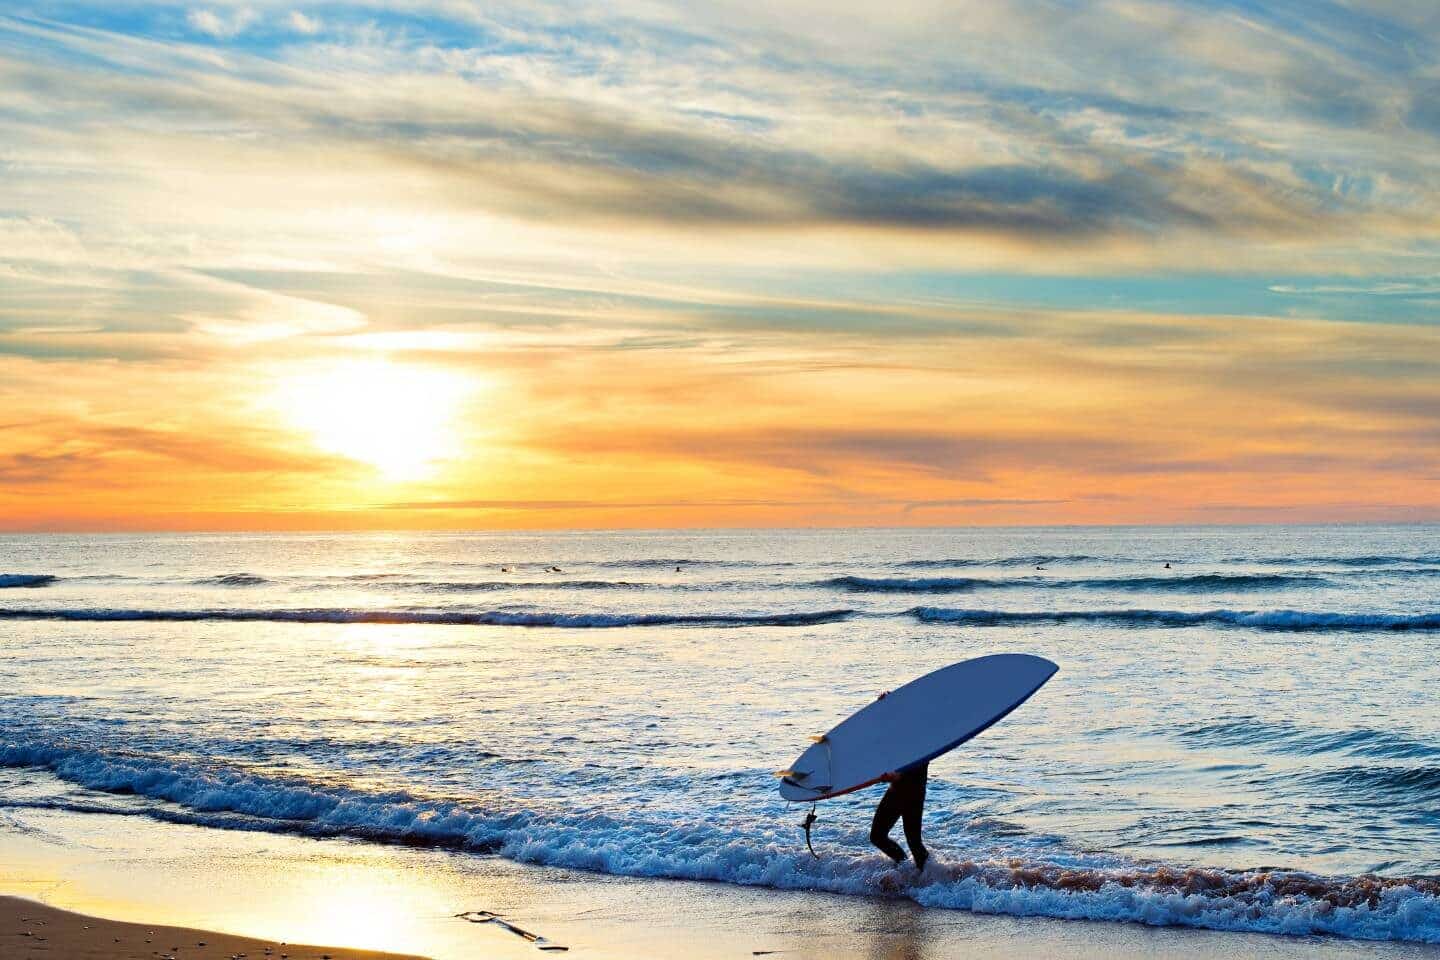 surfing in the Algarve